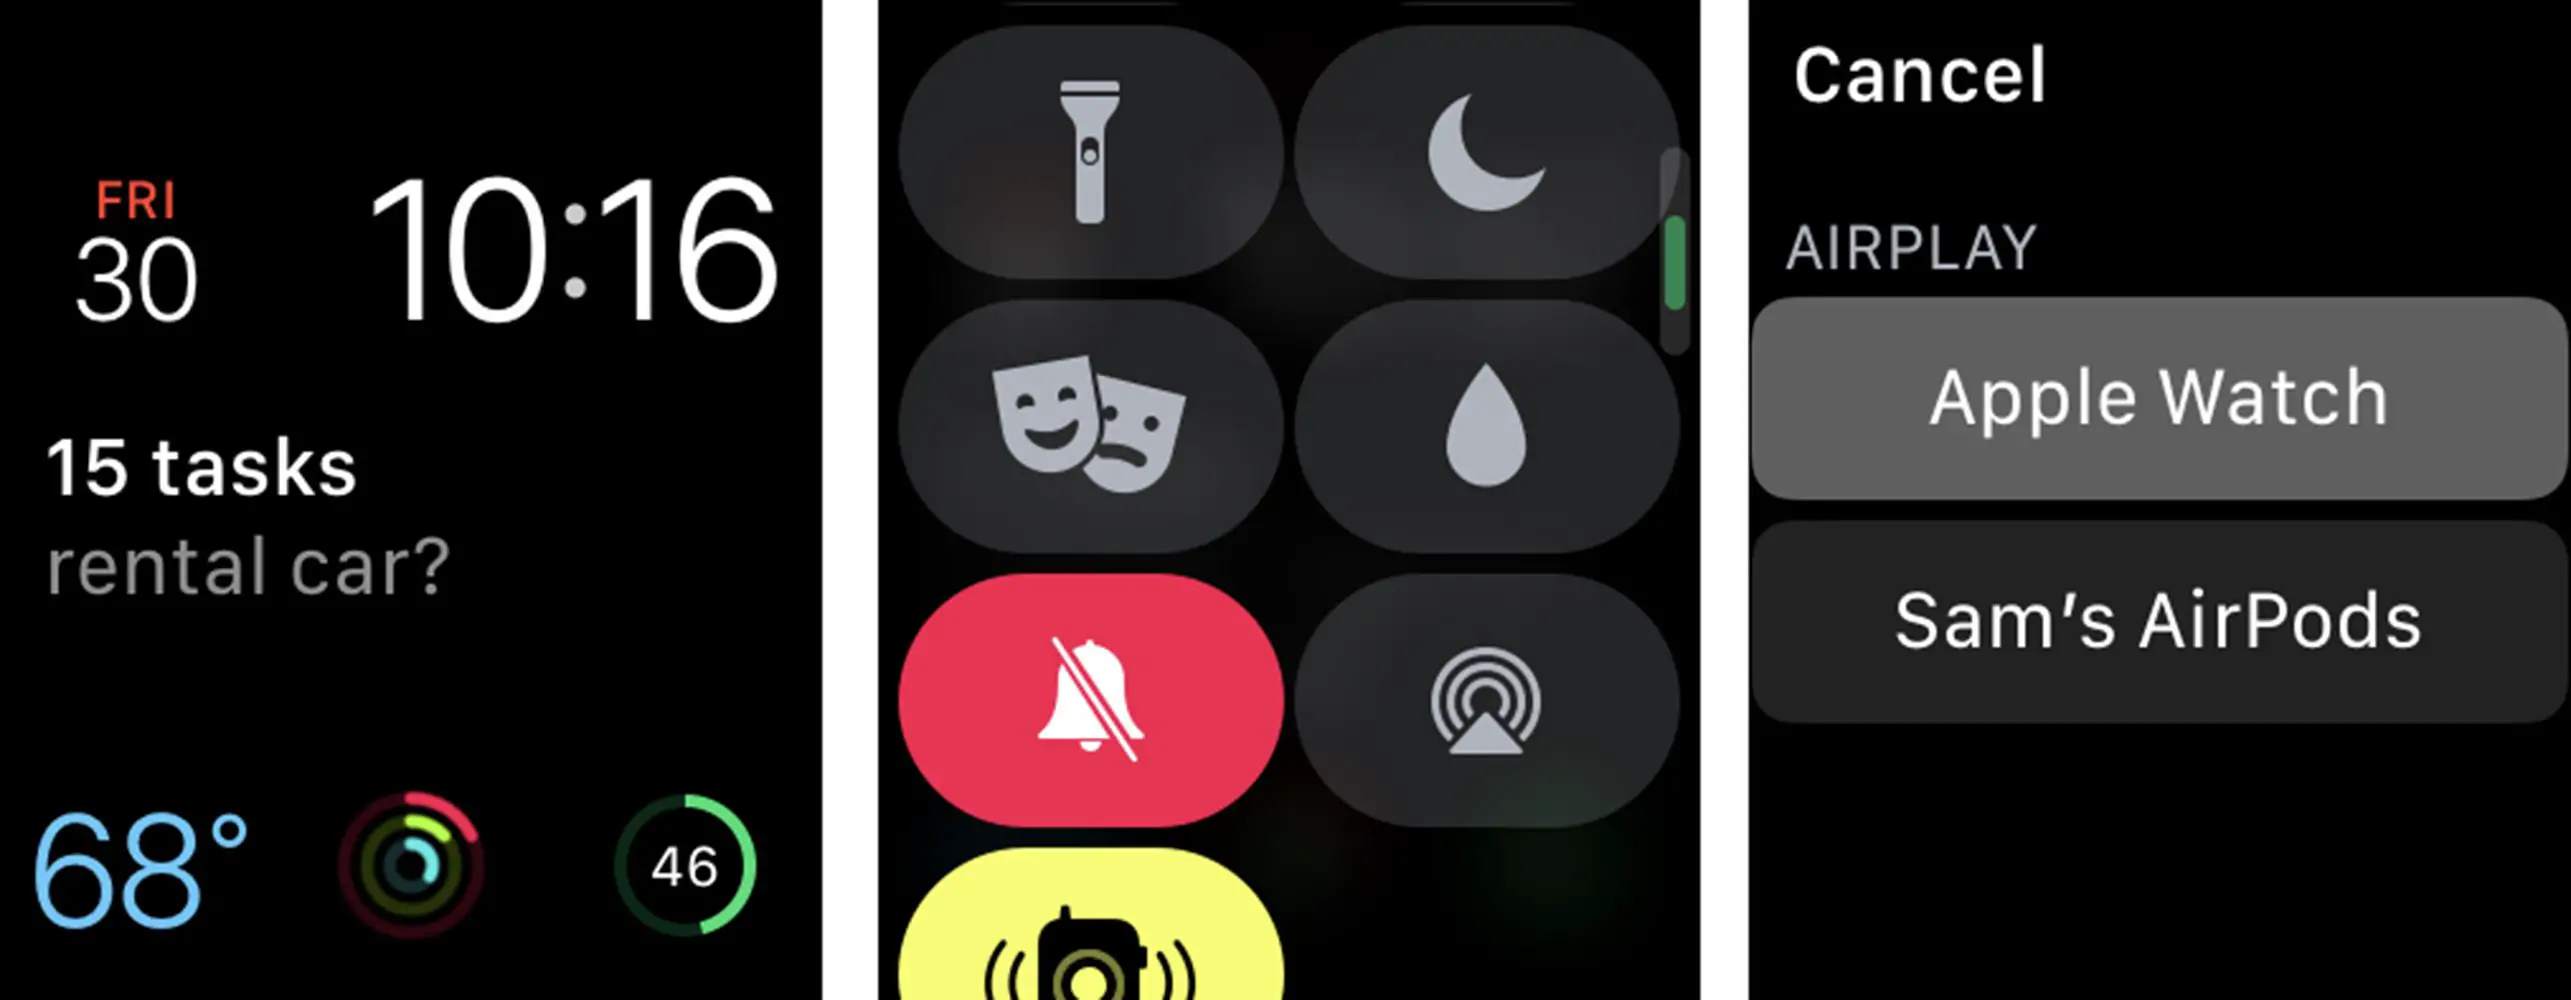 Capturas de tela do envio de áudio para AirPods no Apple Watch